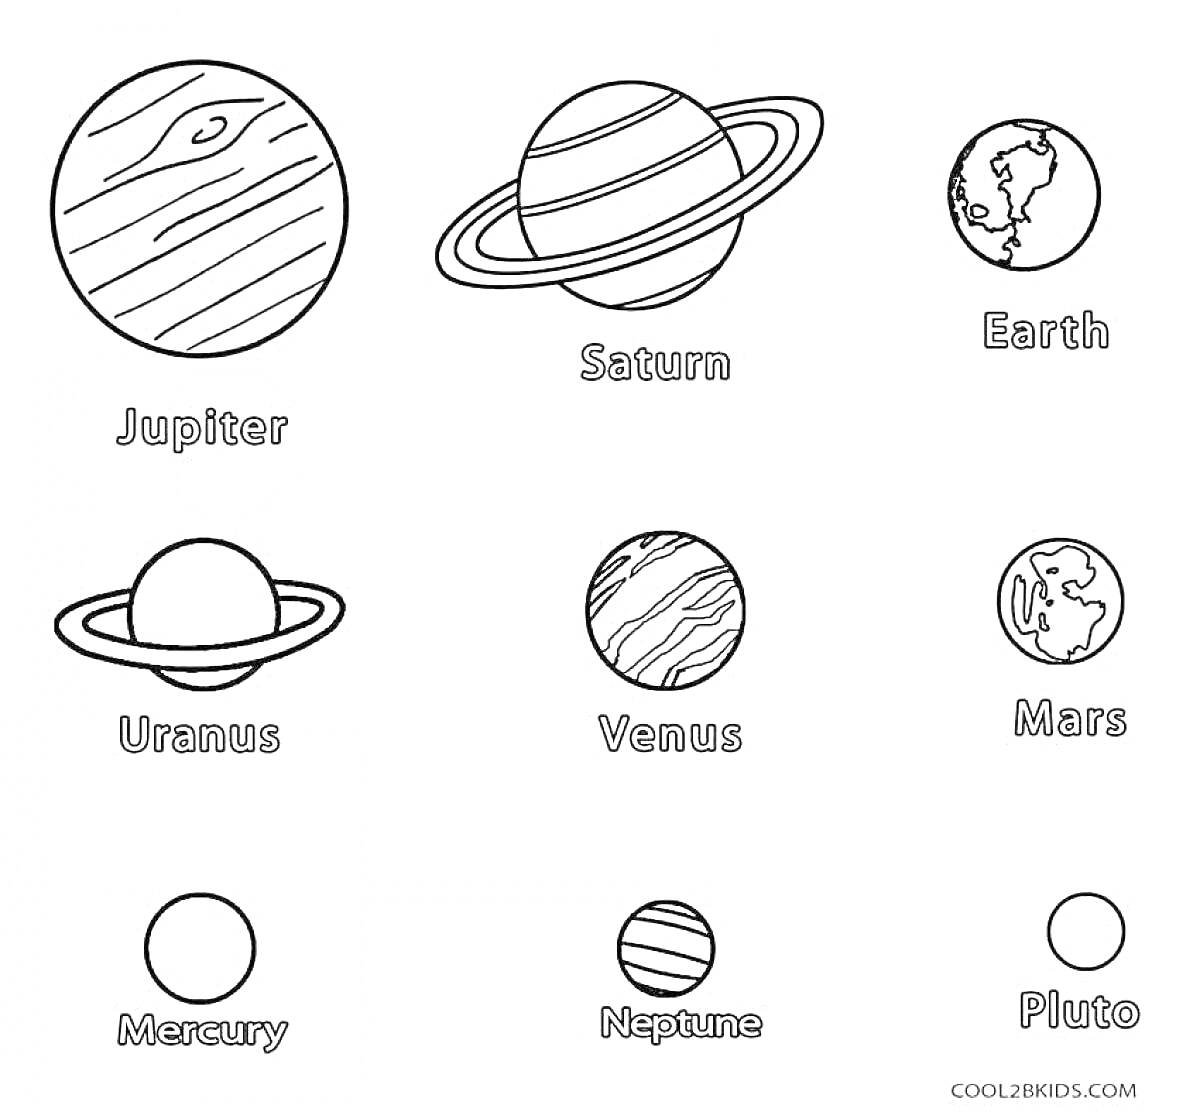 Раскраска Планеты Солнечной системы - Юпитер, Сатурн, Земля, Уран, Венера, Марс, Меркурий, Нептун, Плутон